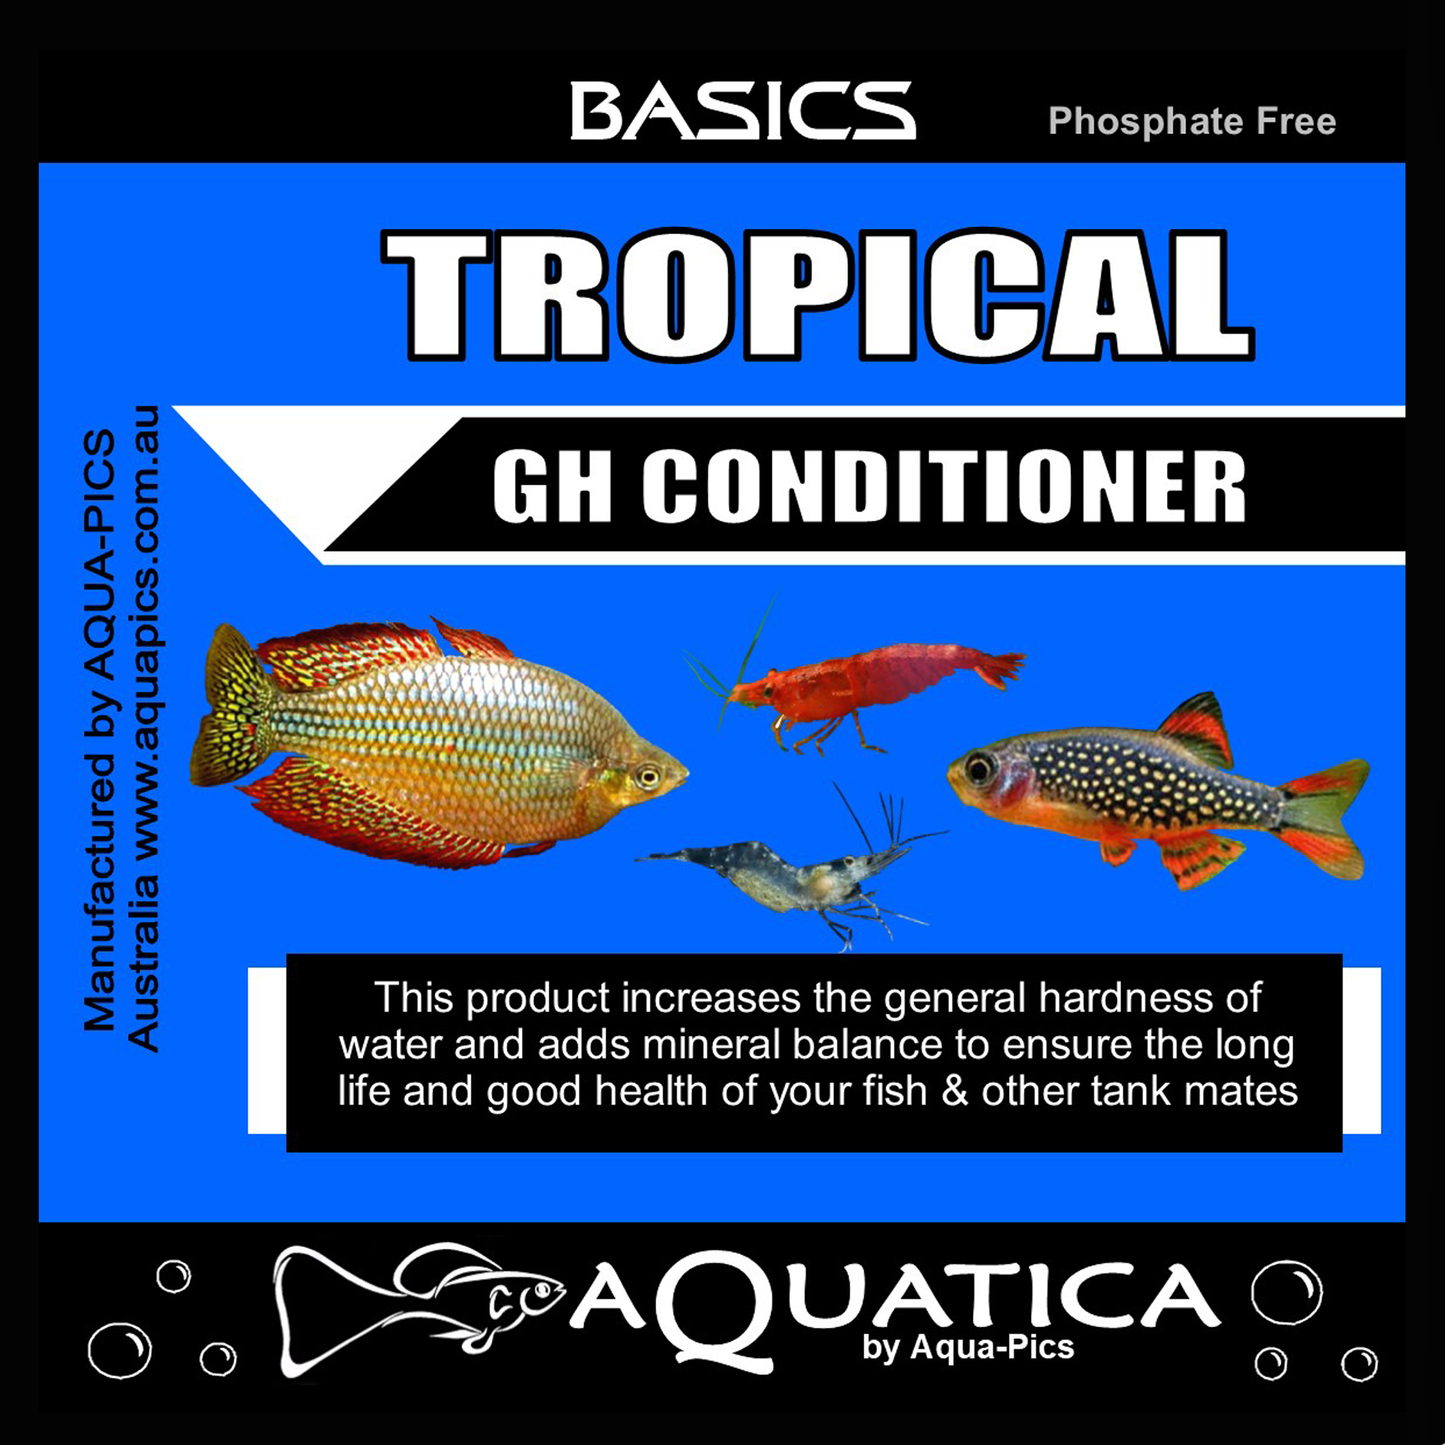 Aquatica Basics Tropical GH Conditioner 500g bag